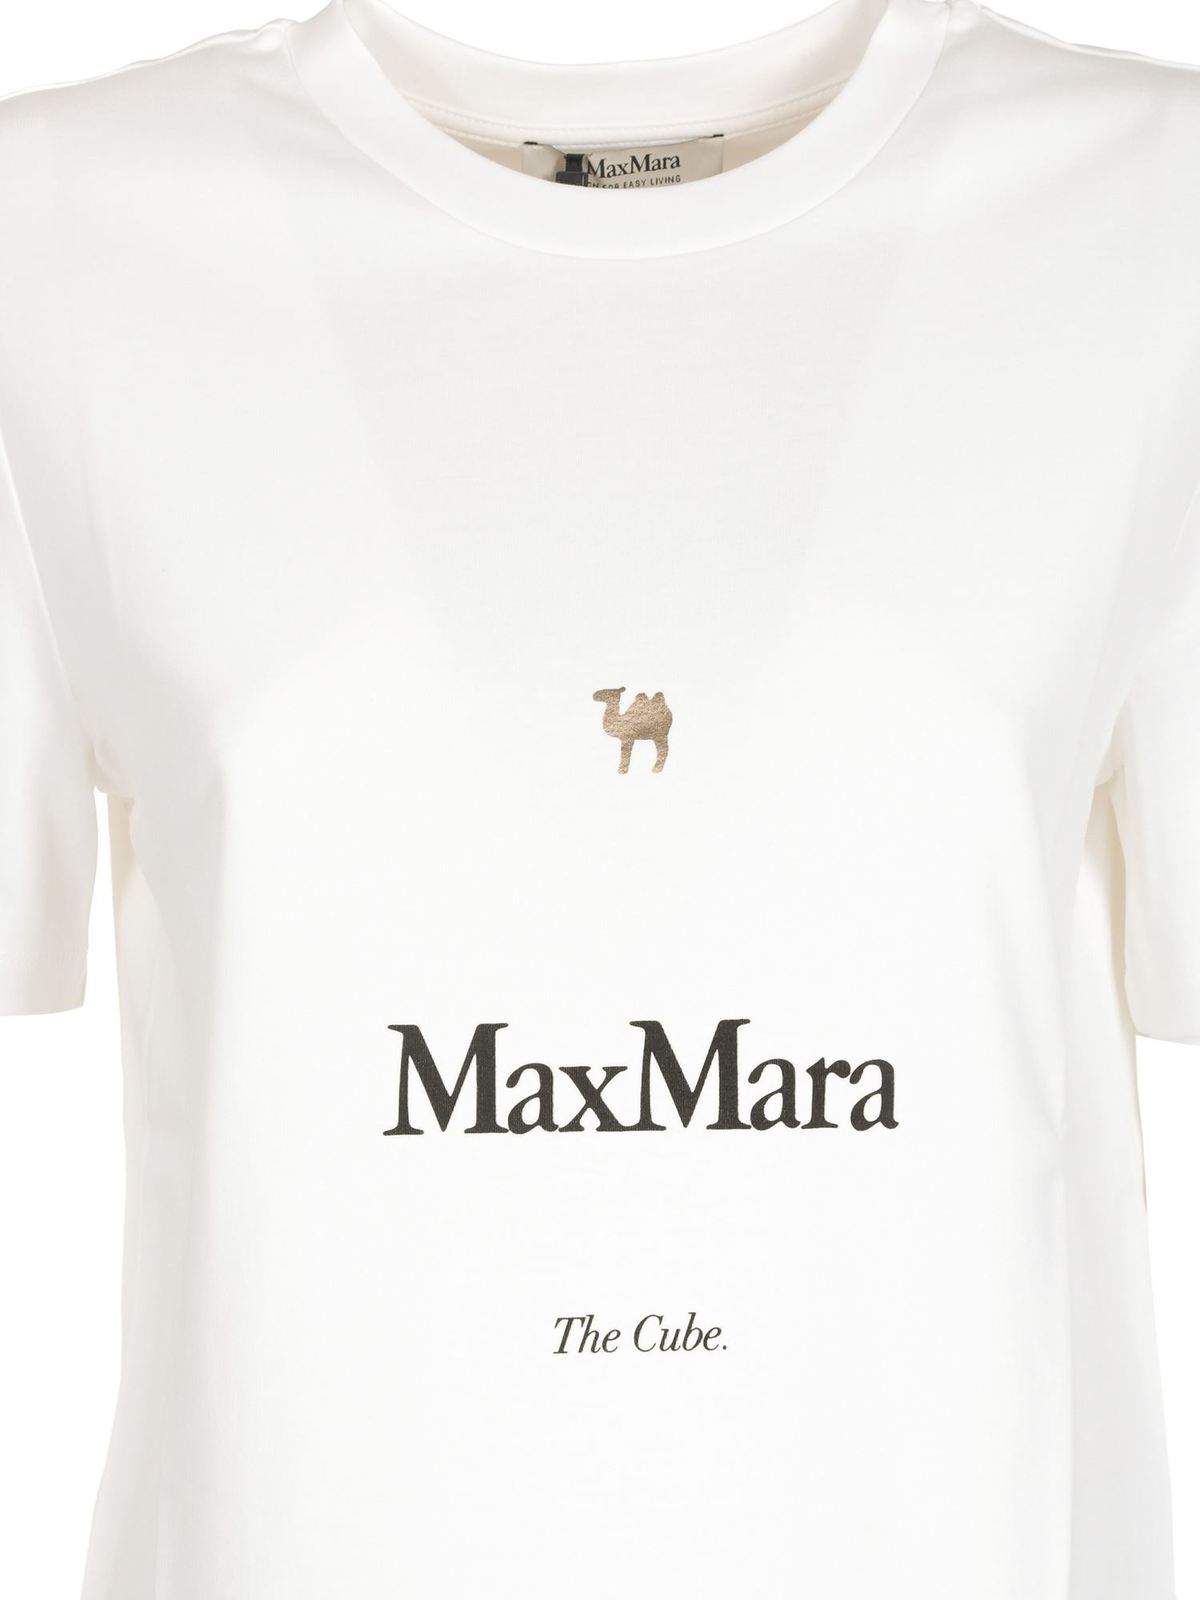 Tシャツ S Max Mara - Tシャツ - 白 - 99760103650011 | THEBS